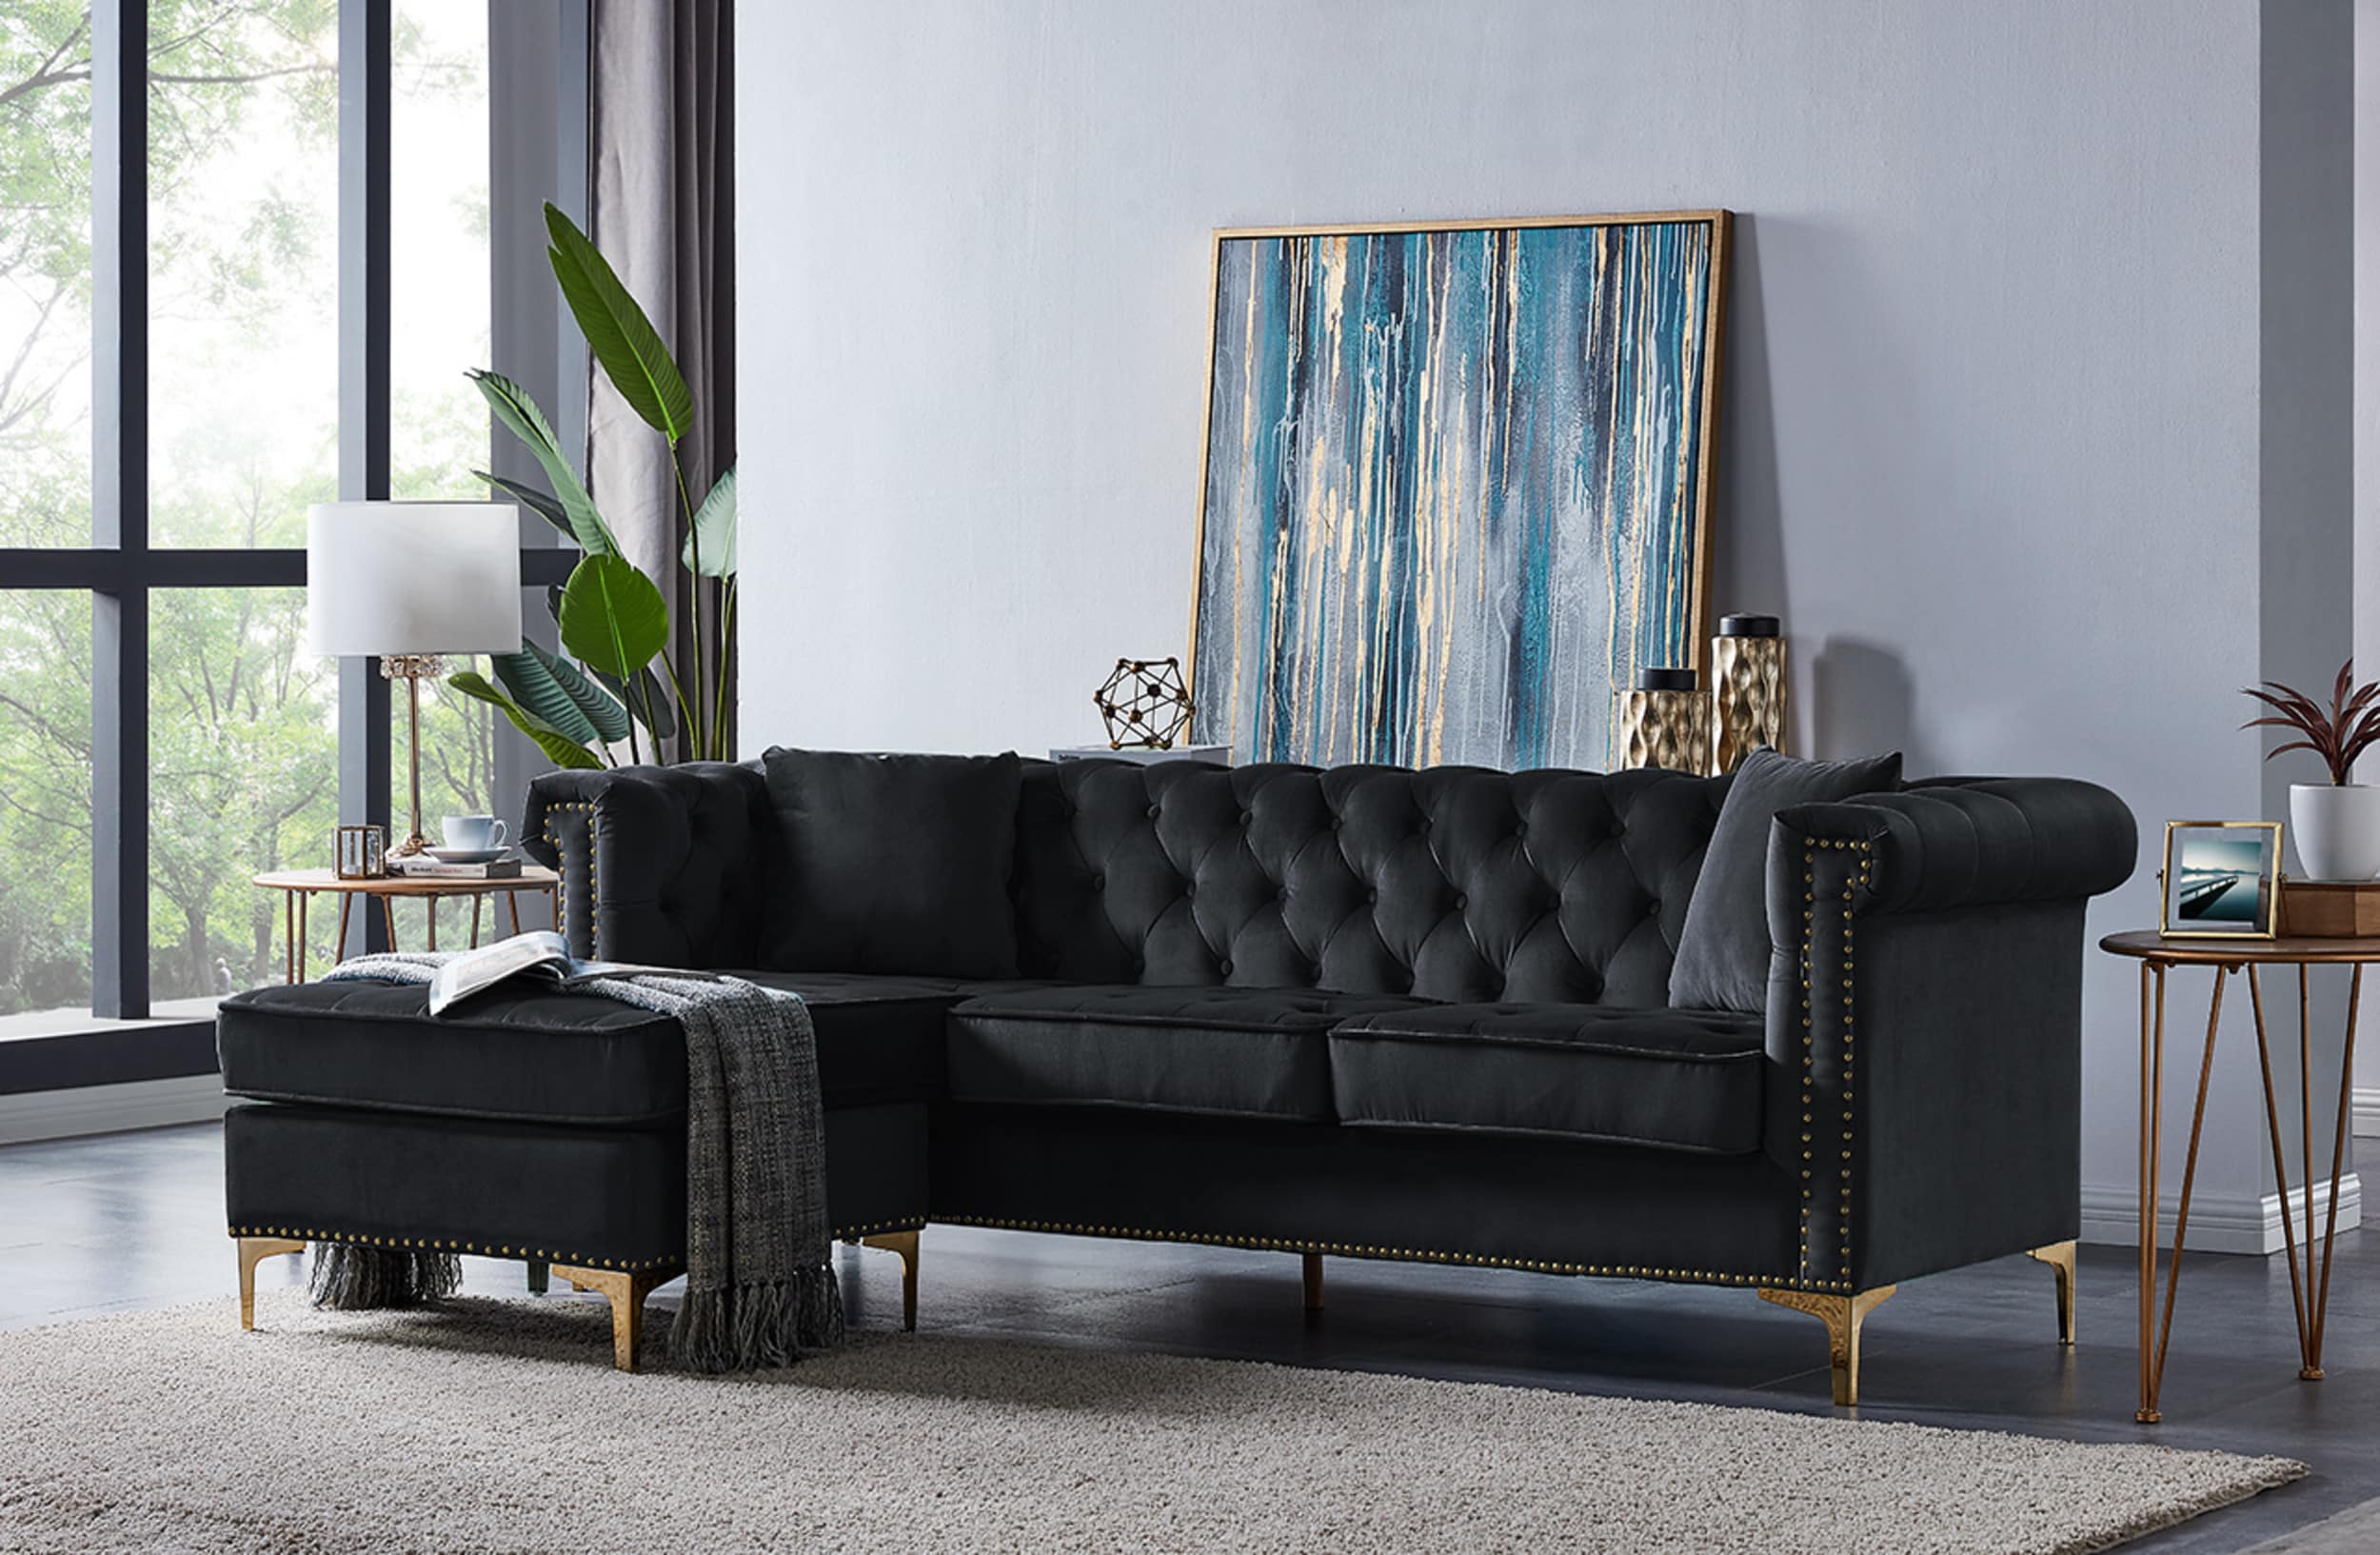 Levin Furniture Leather Sofas Baci Living Room 2810